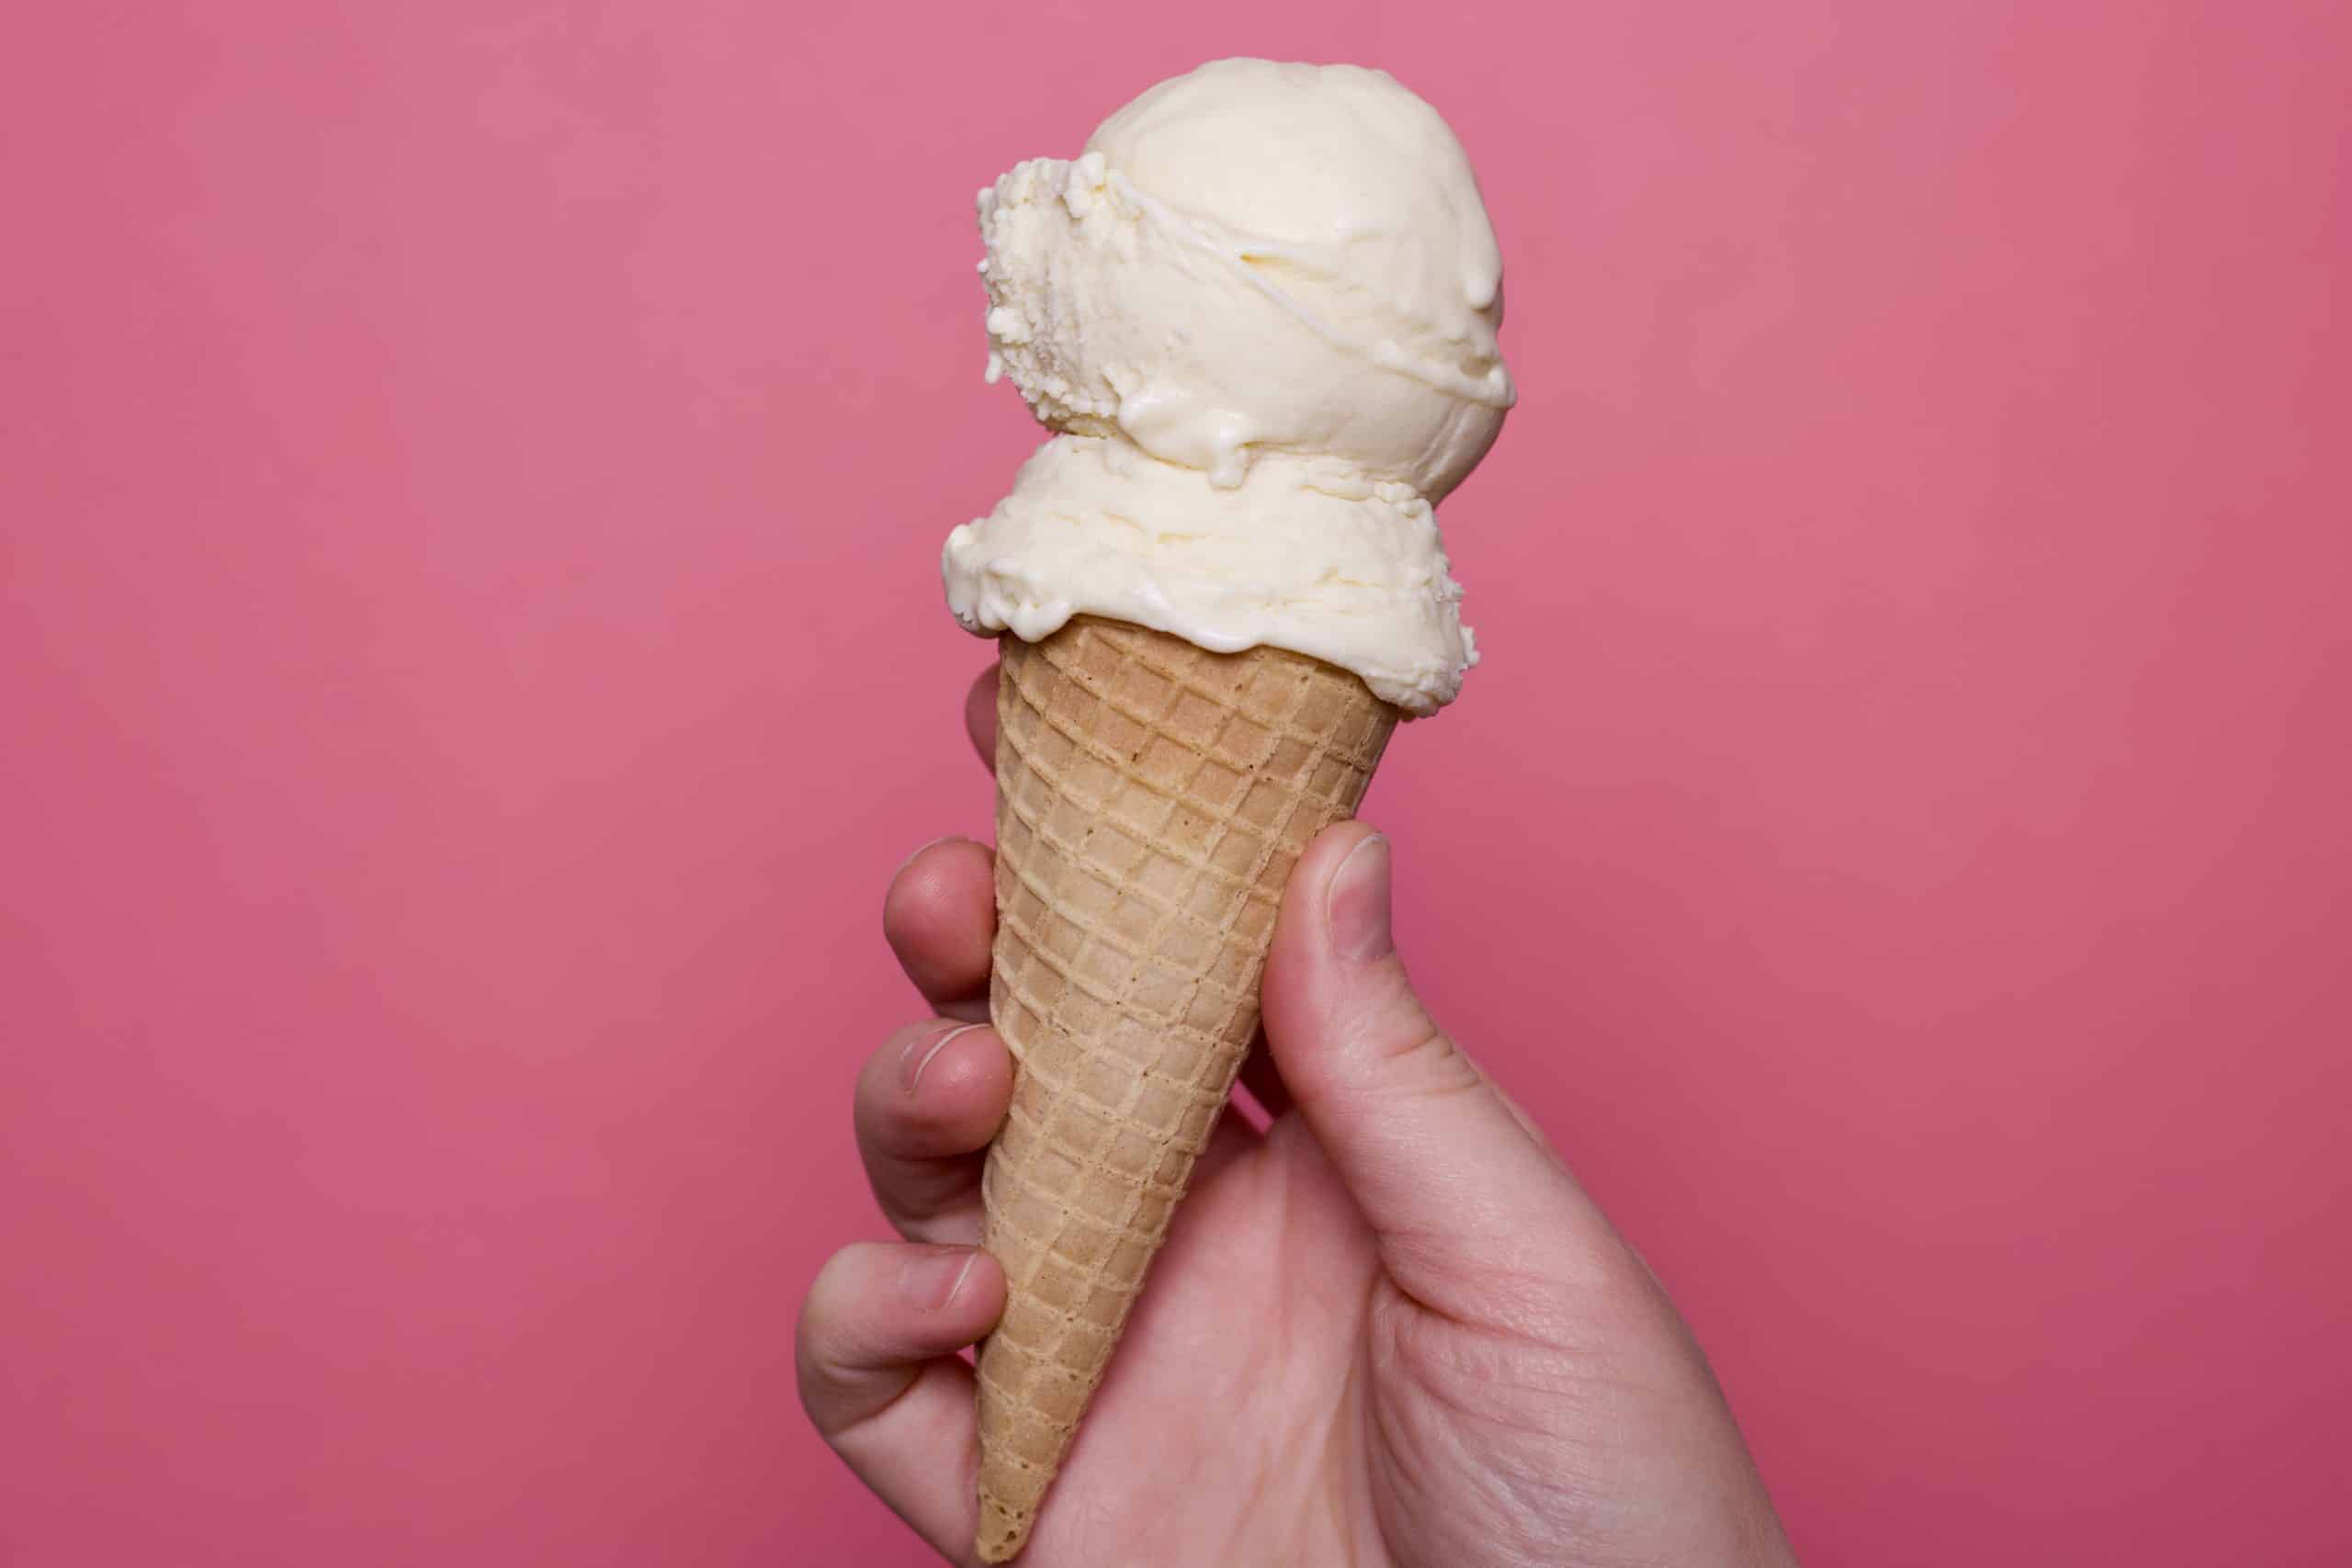 lemon buttermilk ice cream cone against pink background